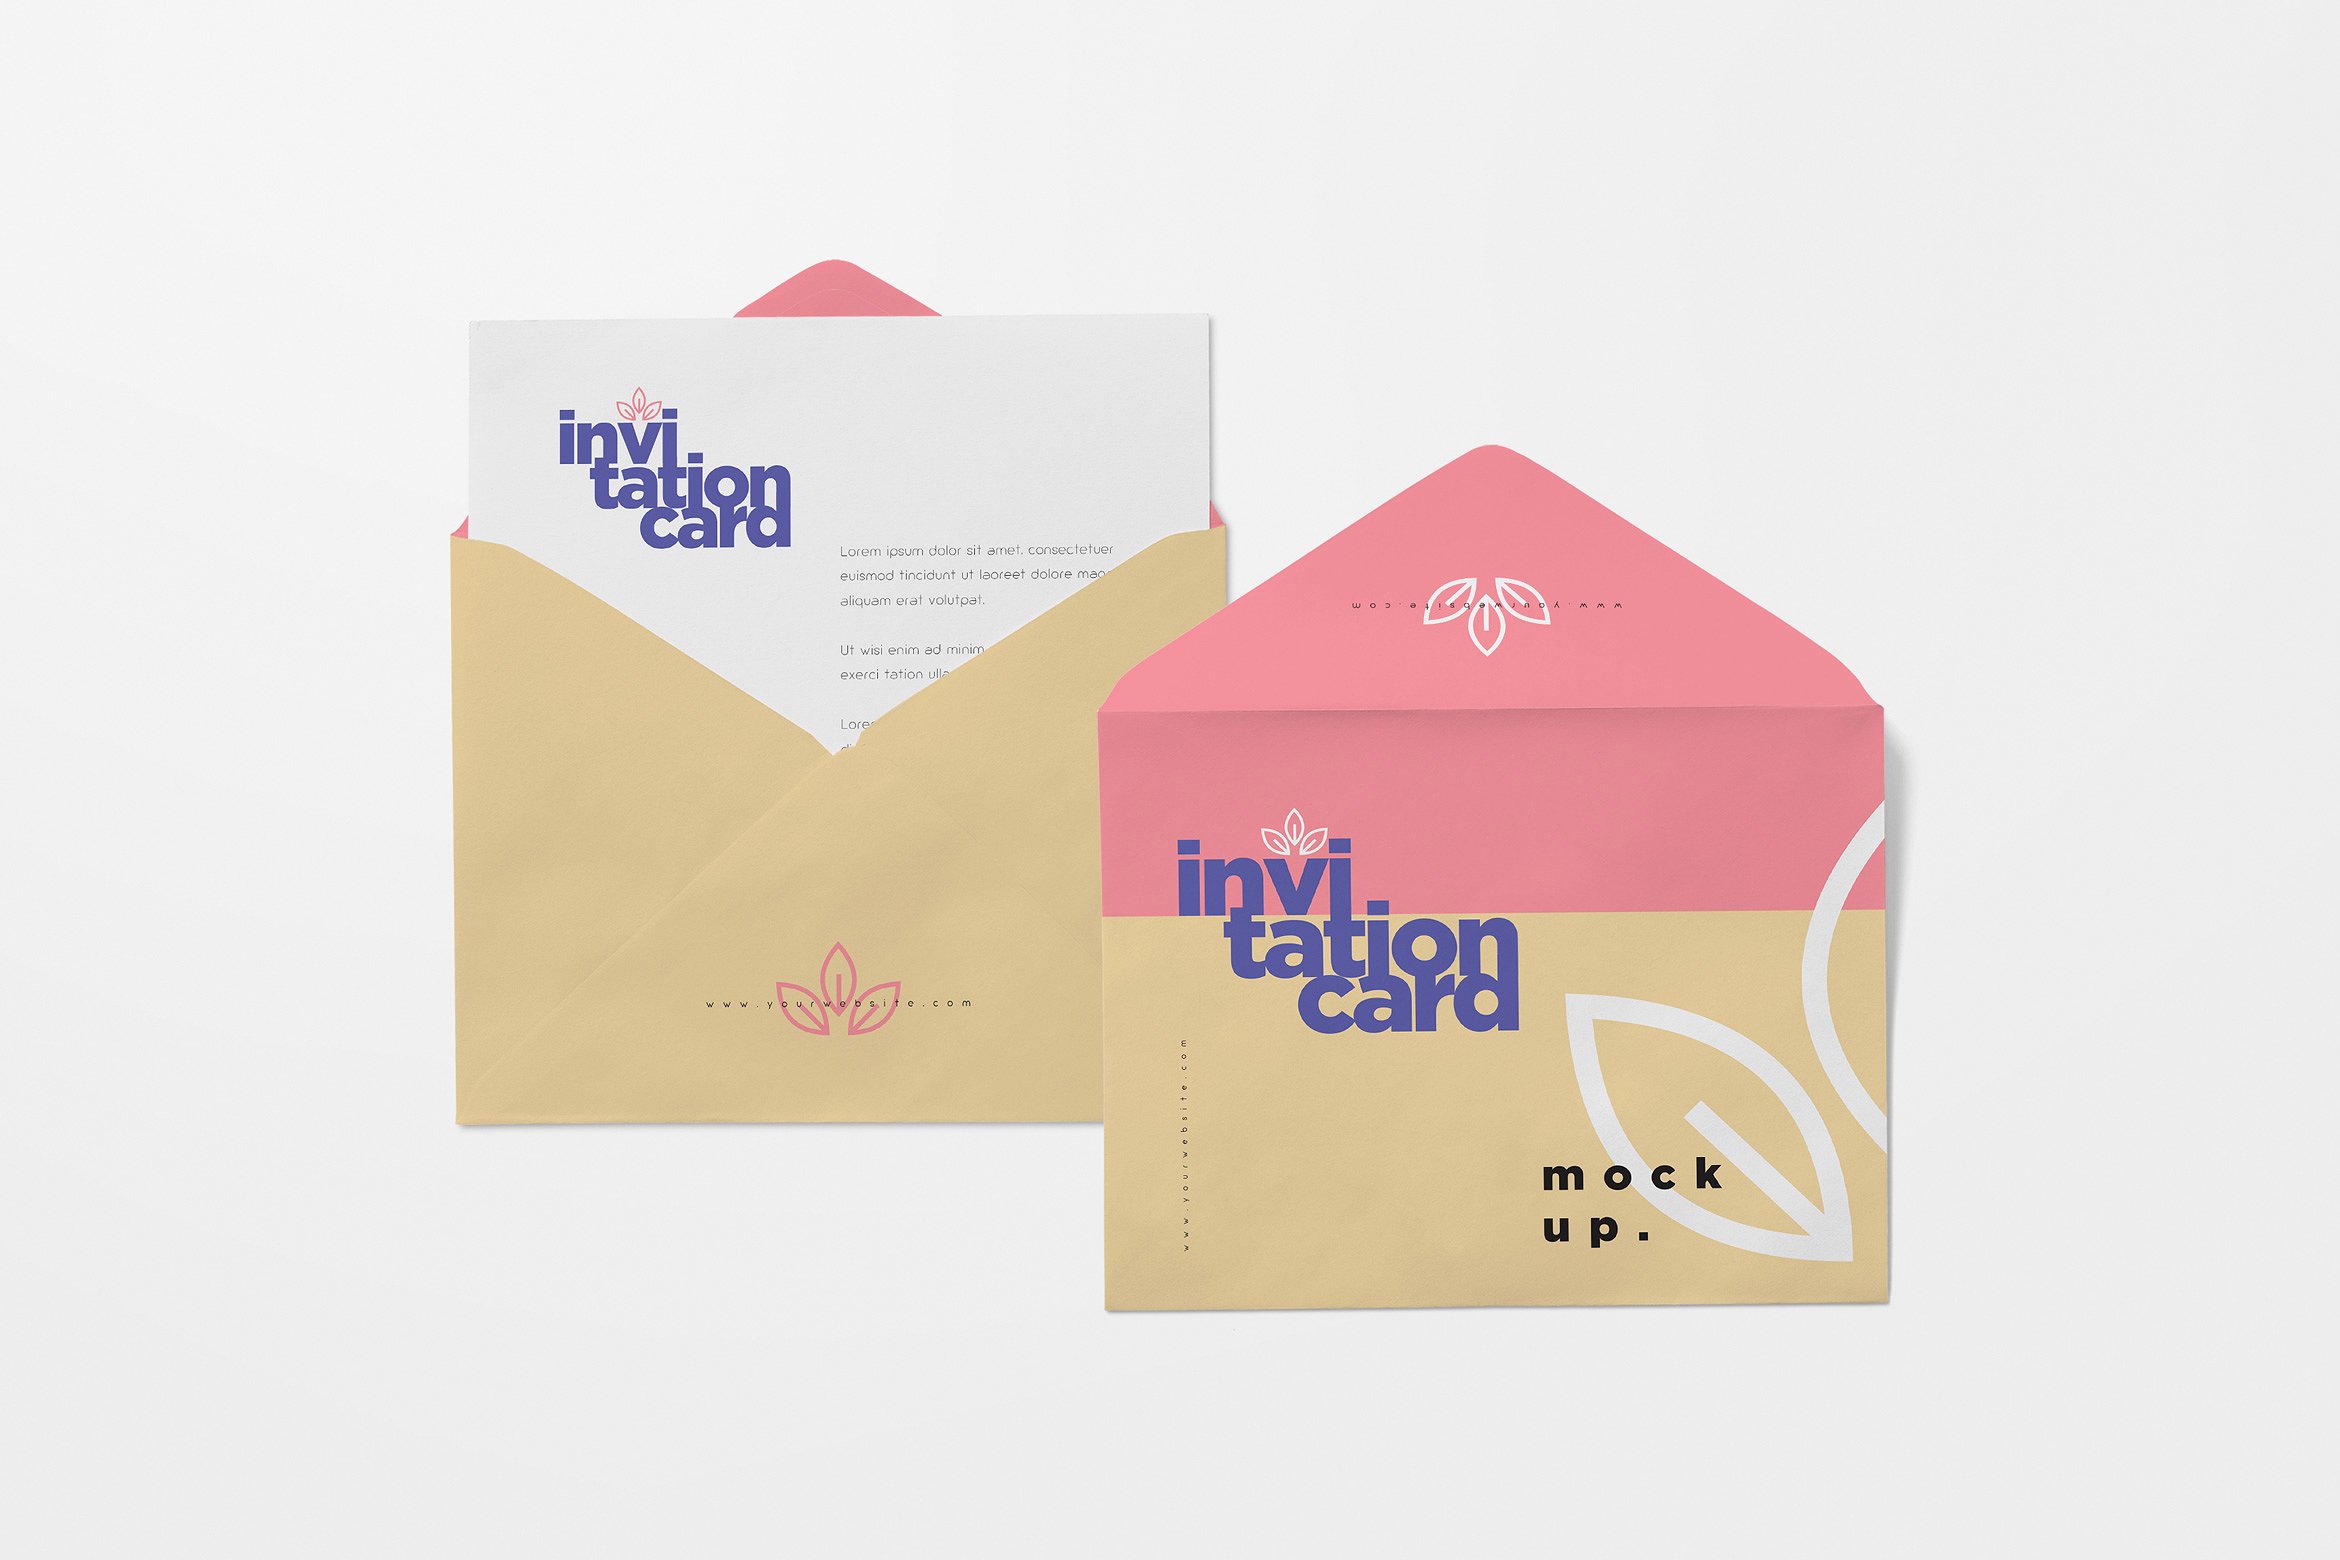 Invitation envelope and card mockups